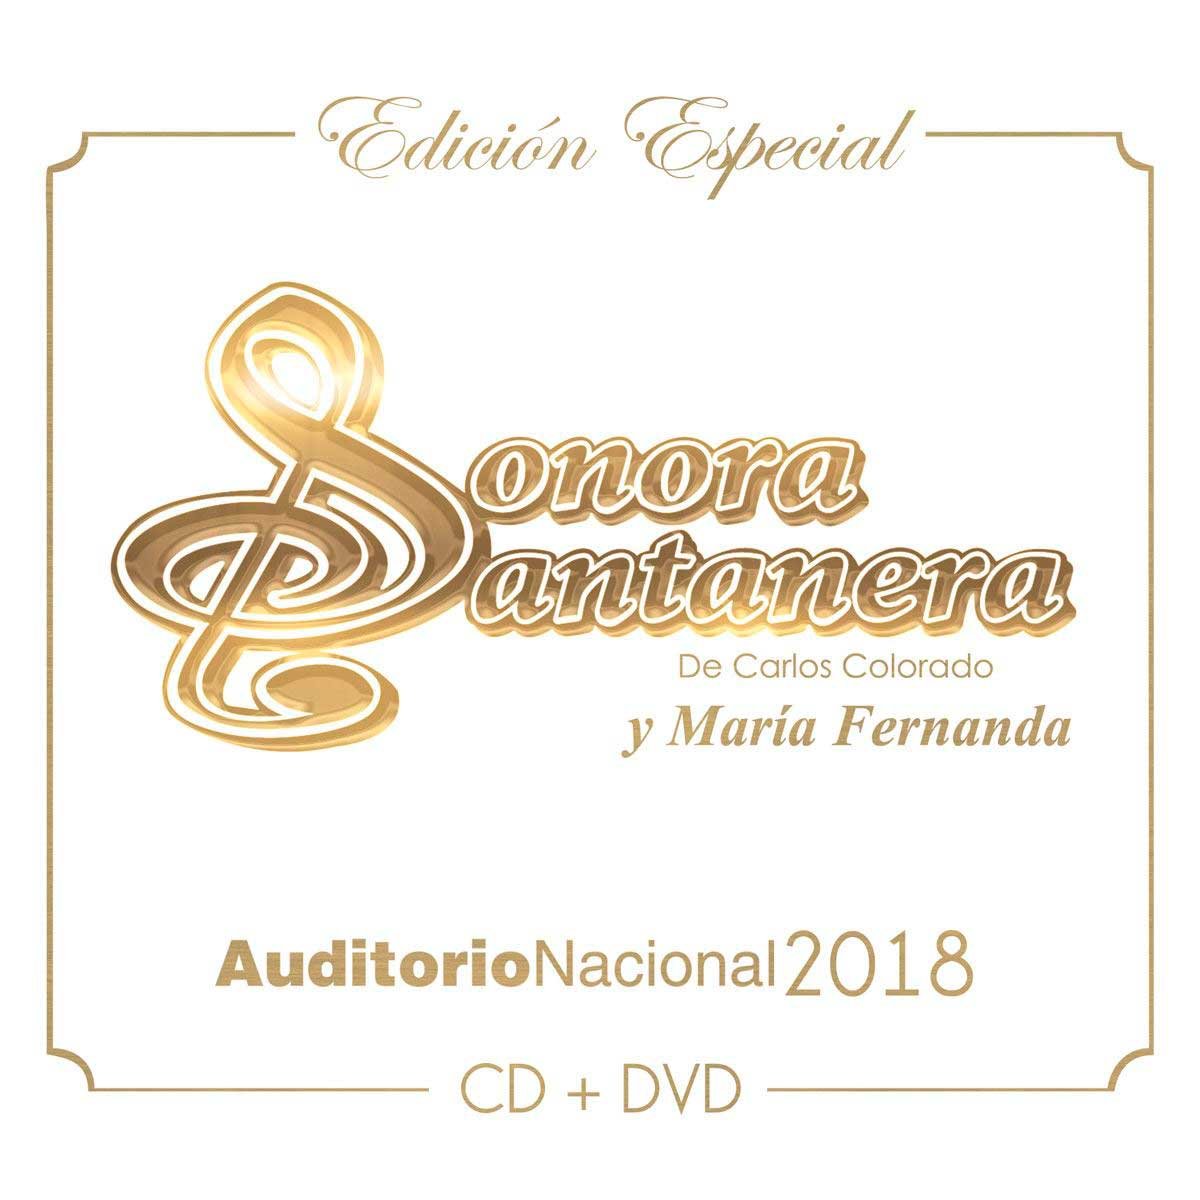 Cd + Dvd la Sonora Santanera Auditorio Nacional en V